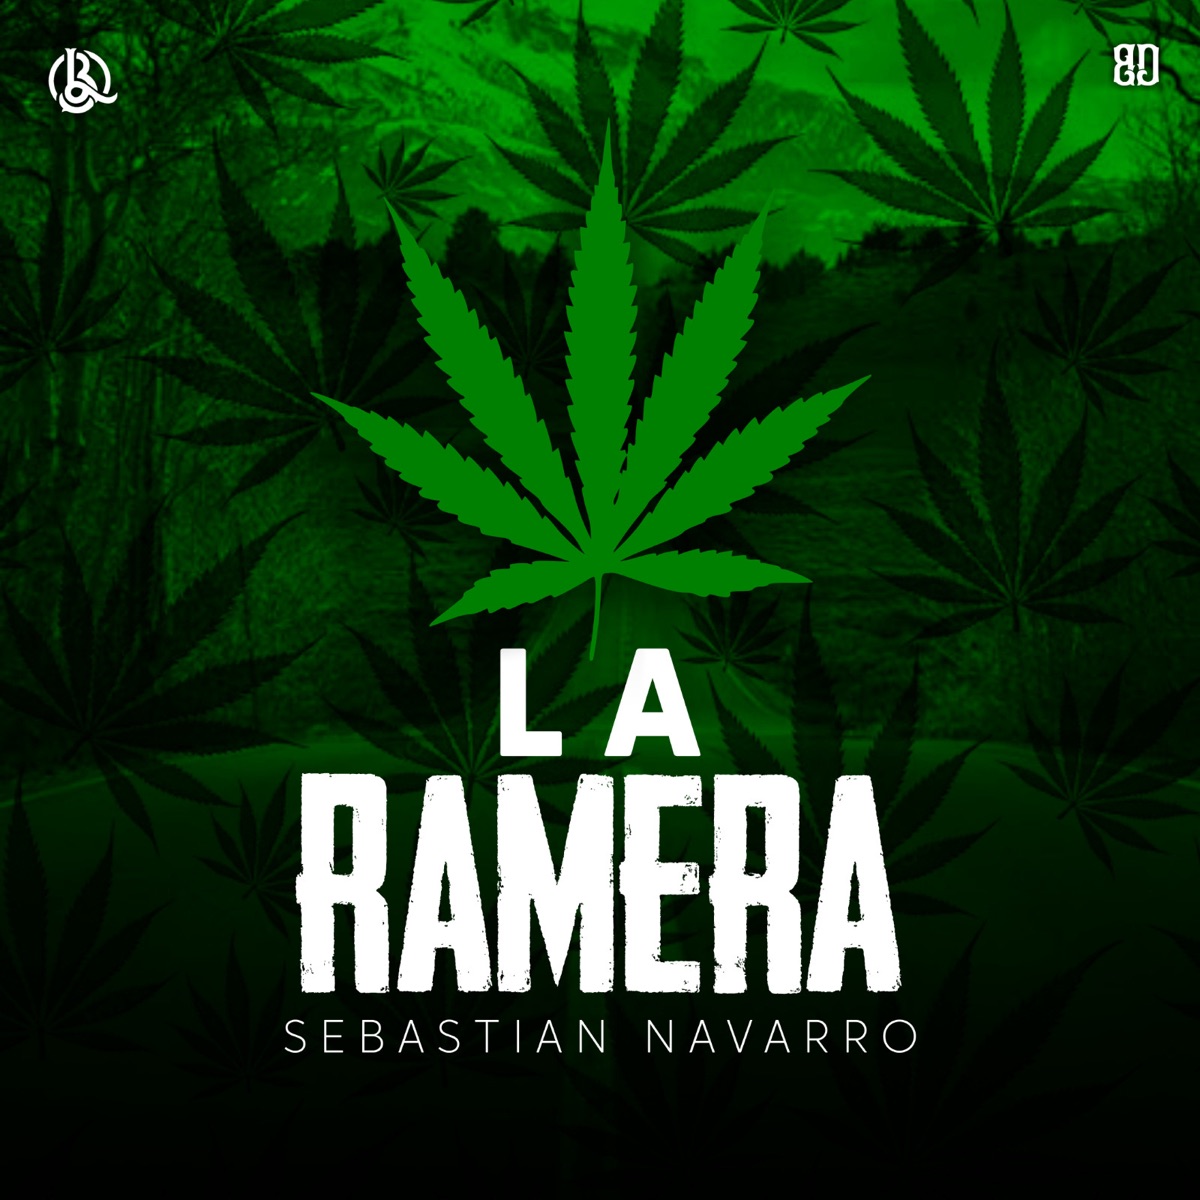 La Ramera - Single by Sebastian Navarro on Apple Music